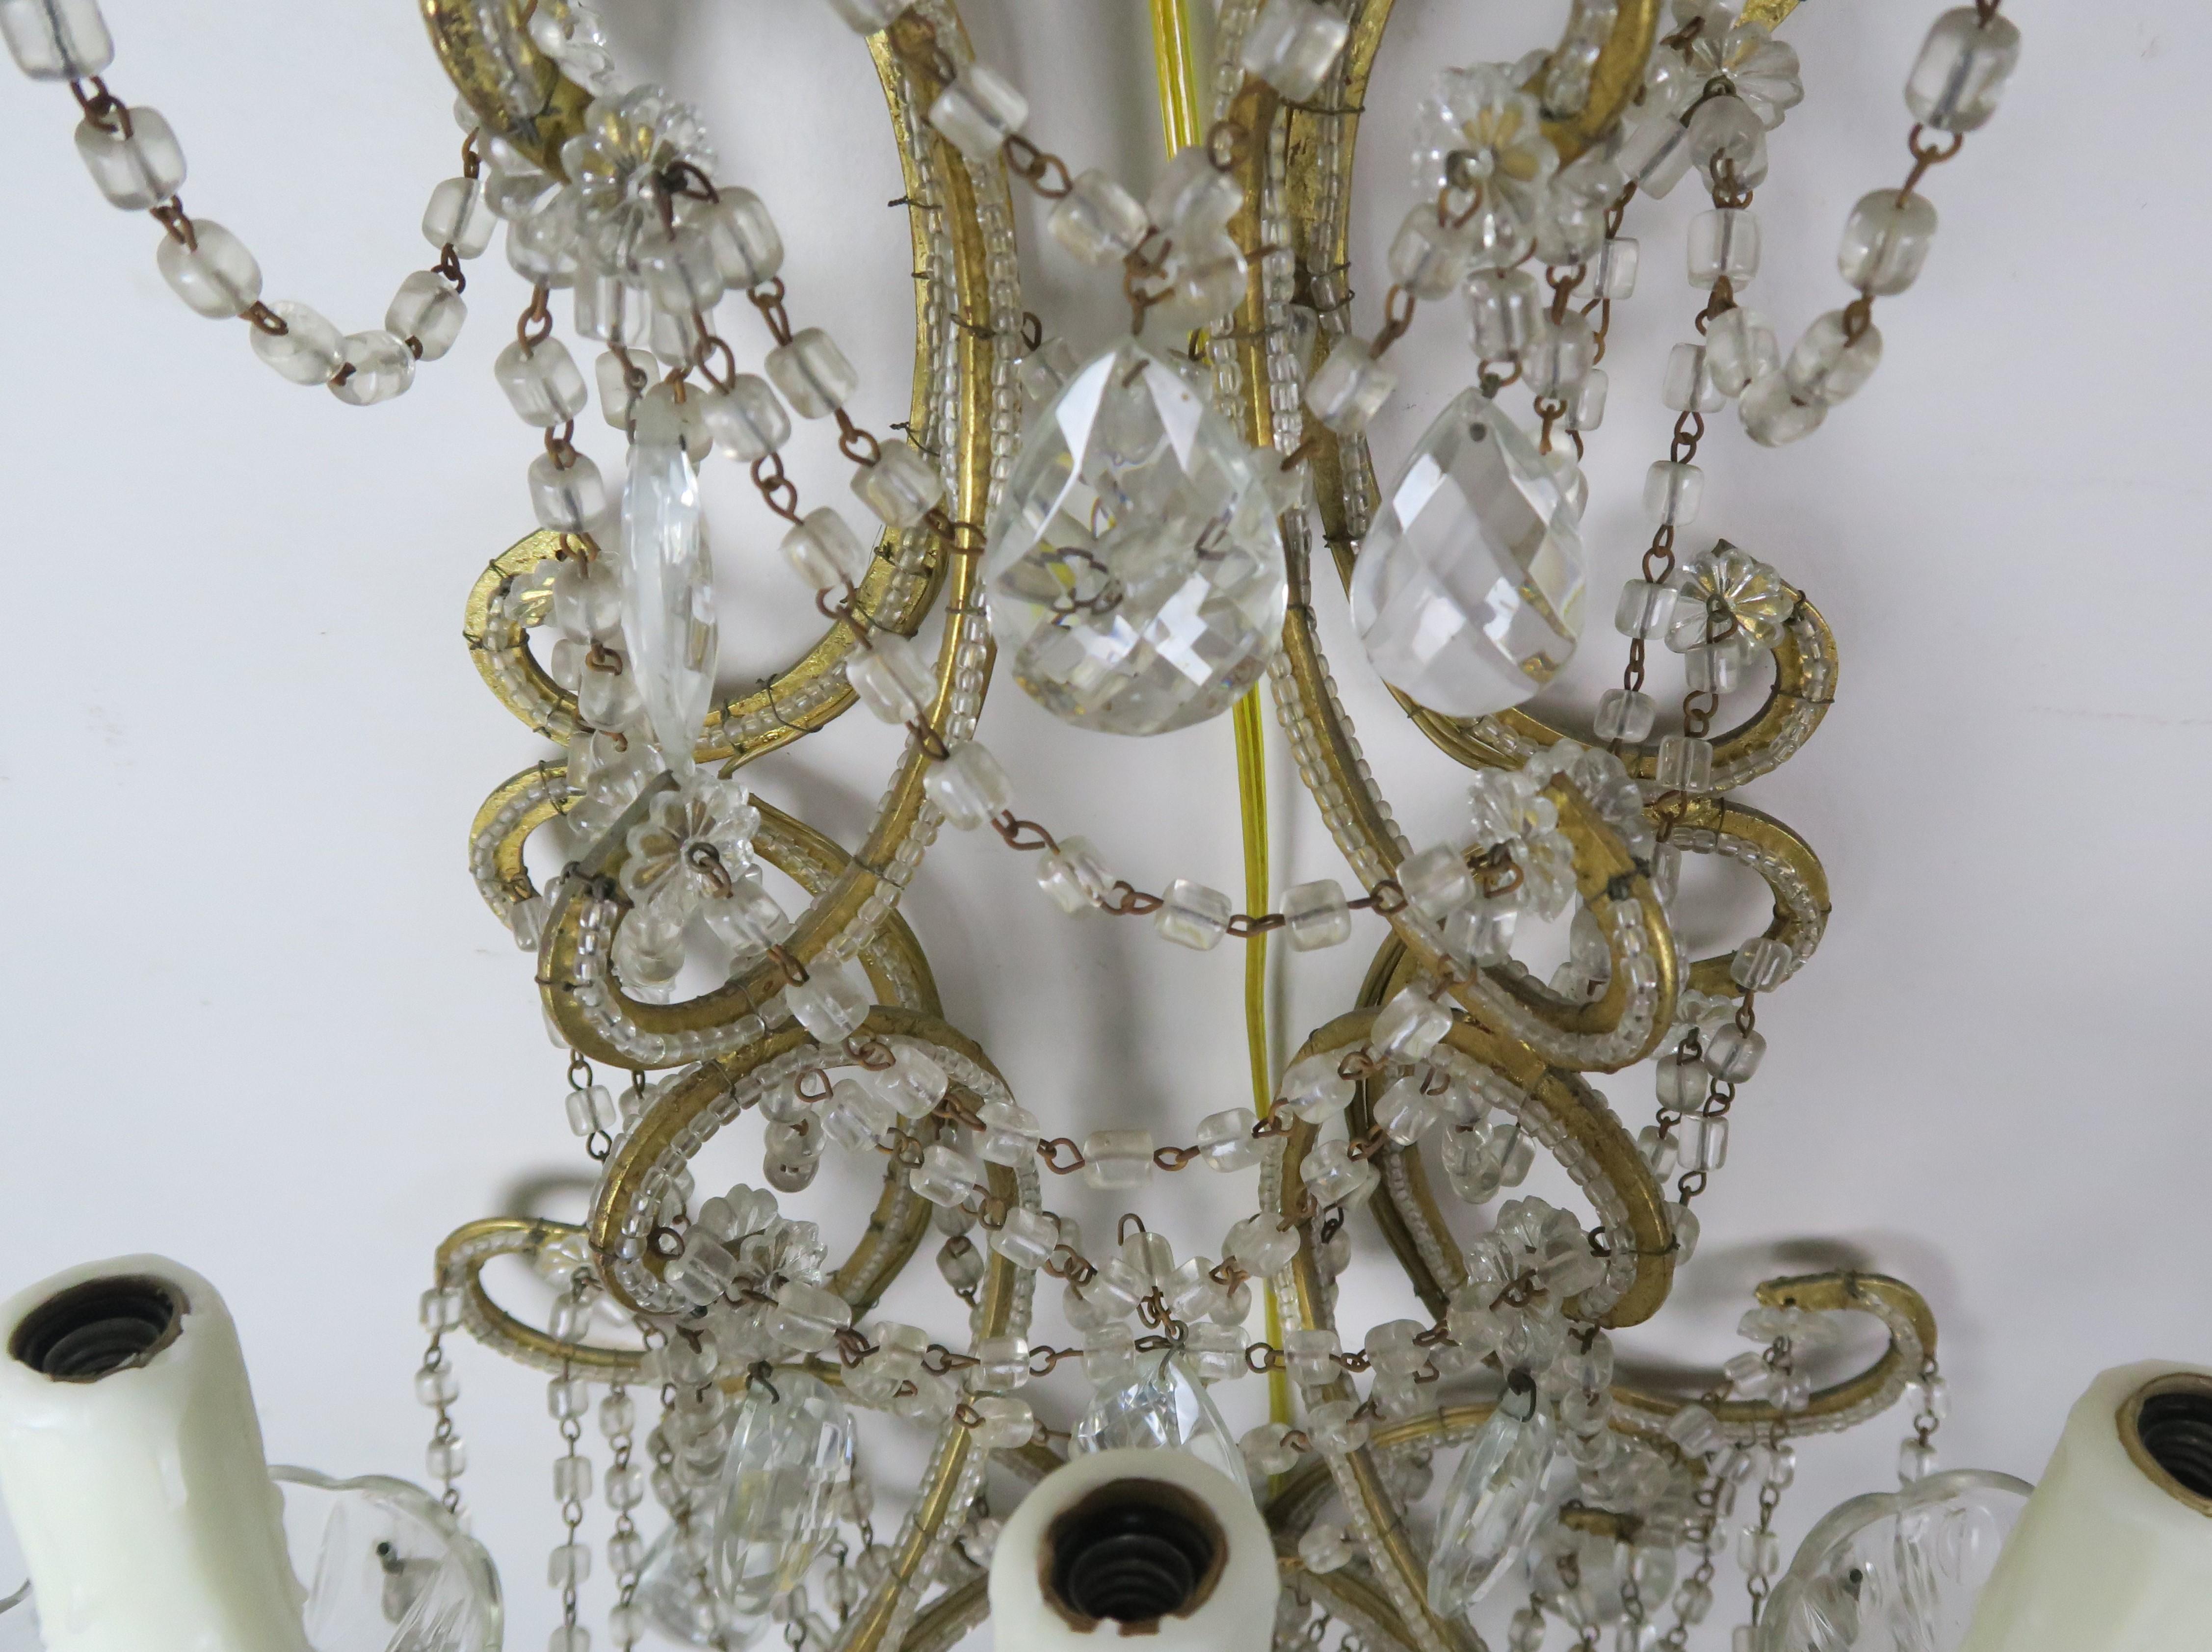 Italienischer Perlenkristall-Wandleuchter mit sechs Leuchten, ca. 1940er Jahre (Metall)